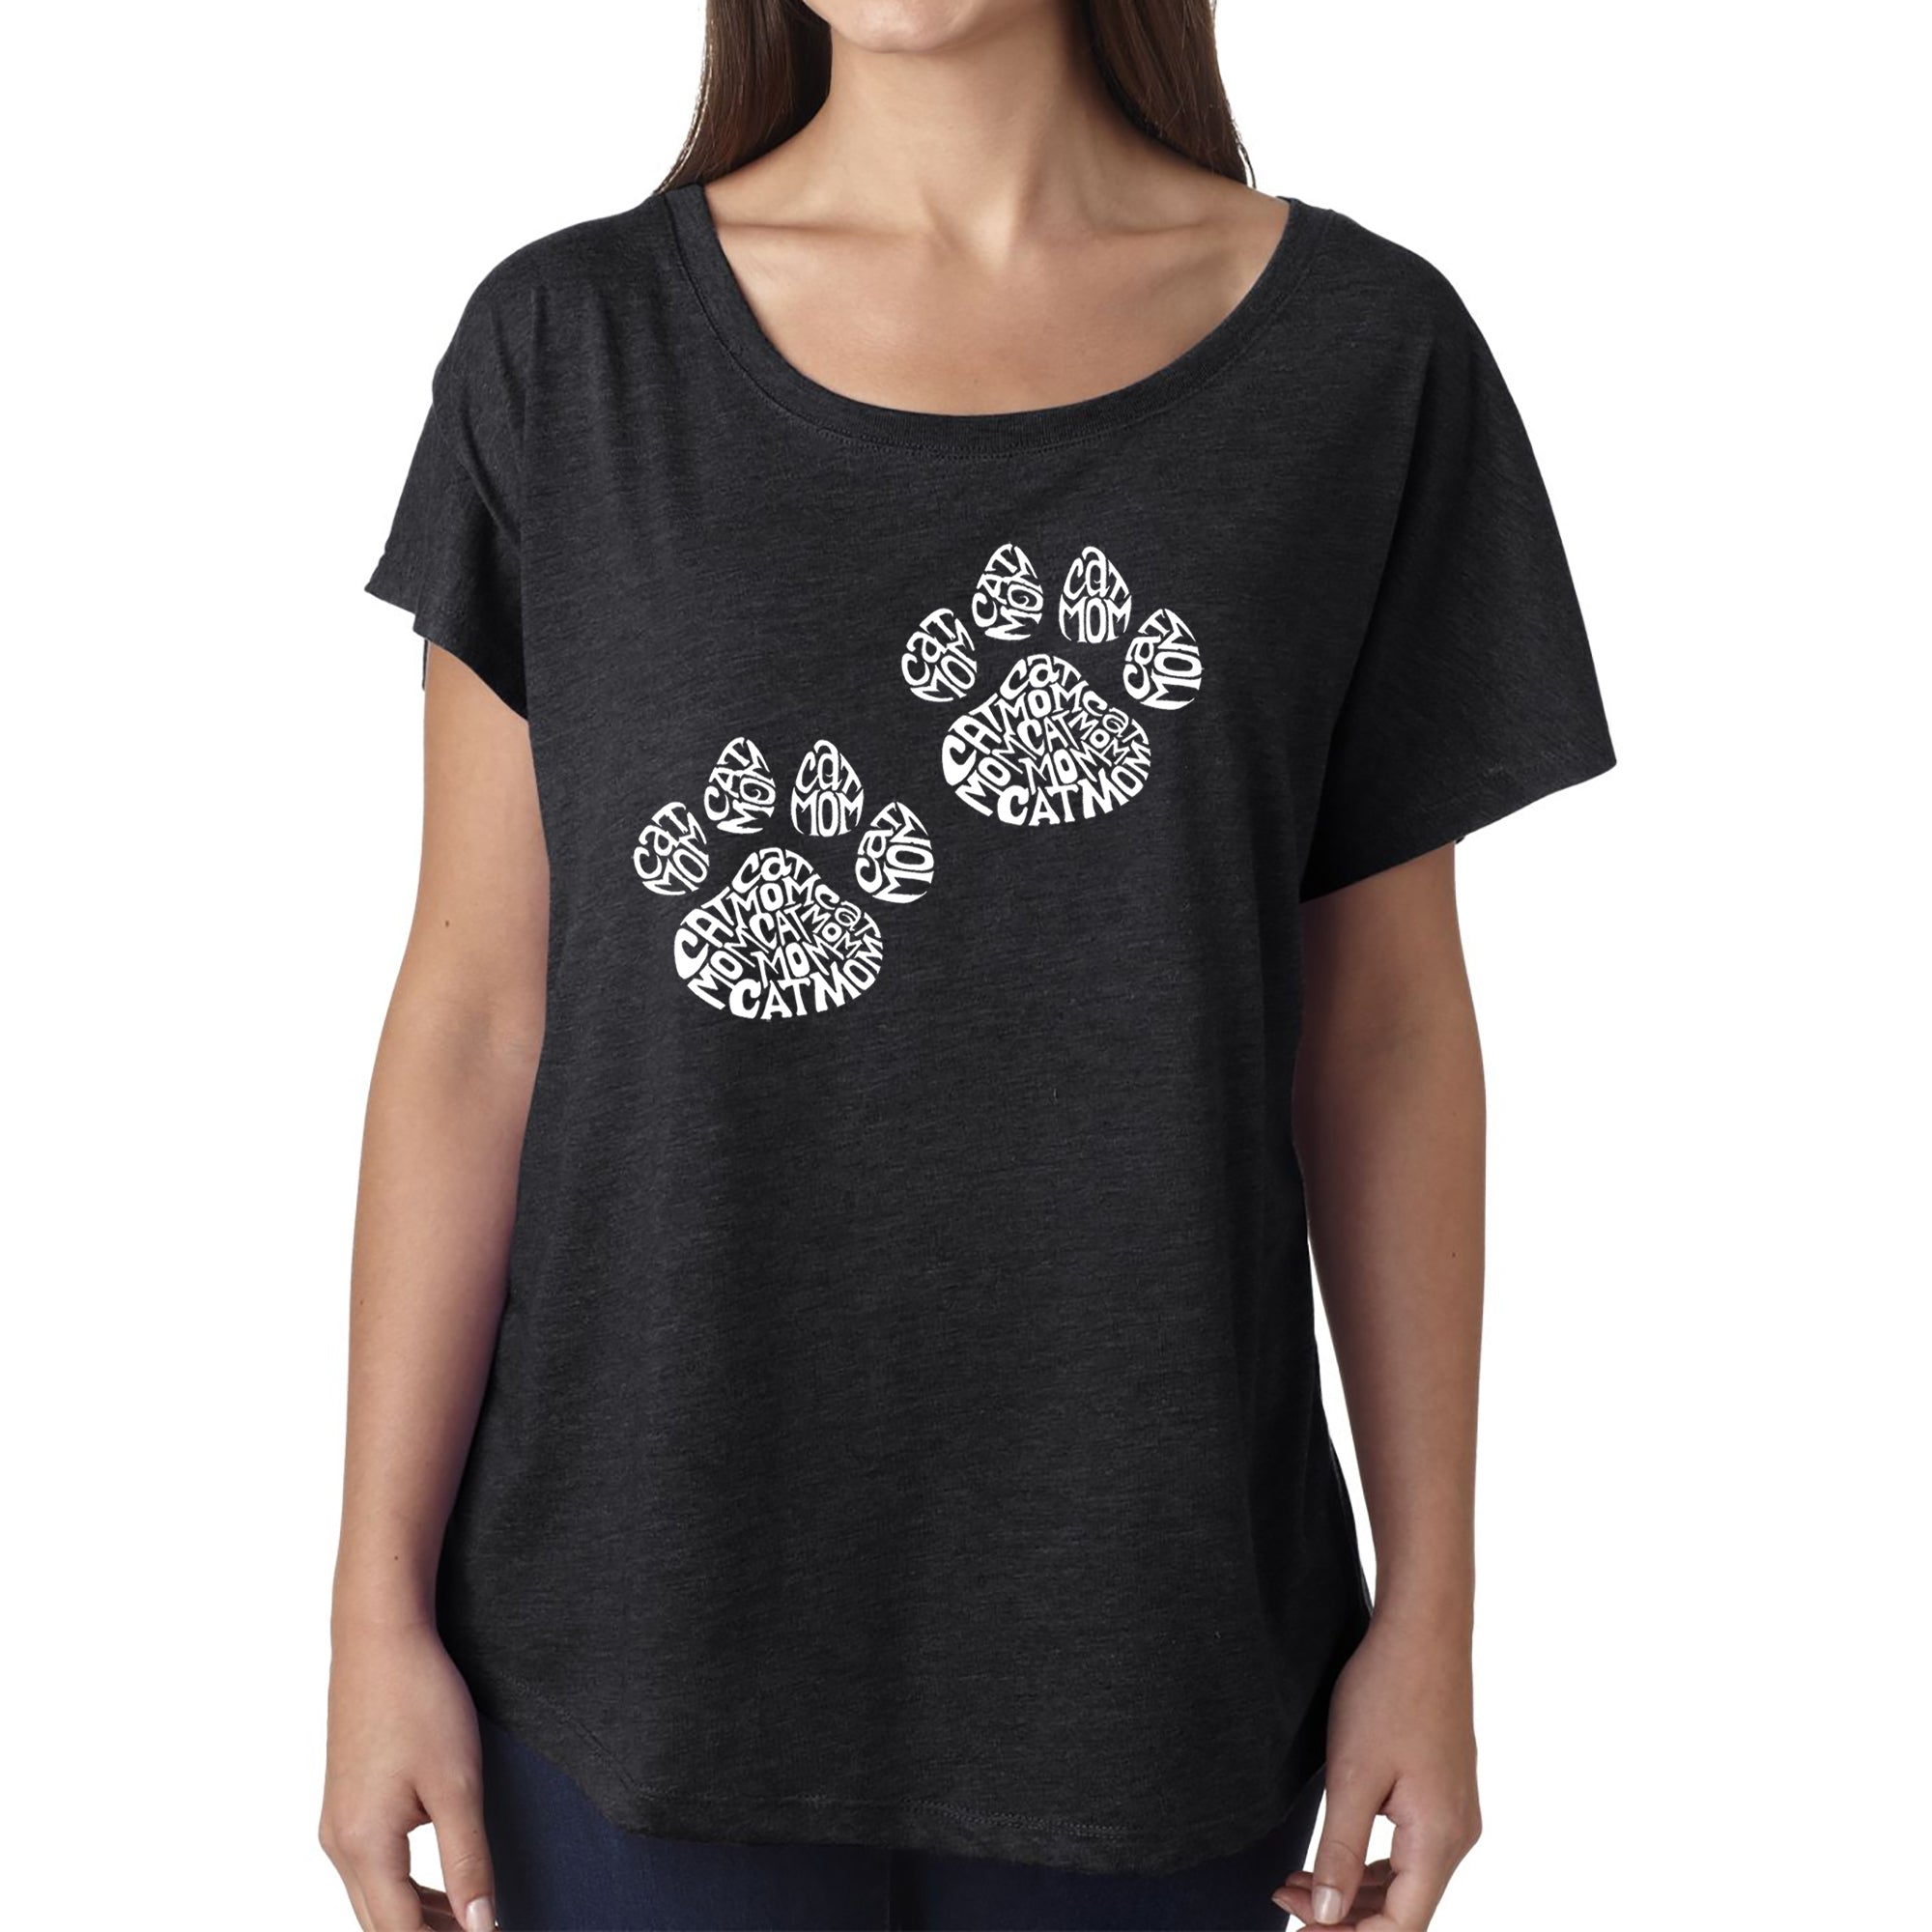 Cat Mom - Women's Loose Fit Dolman Cut Word Art Shirt - Black - Small